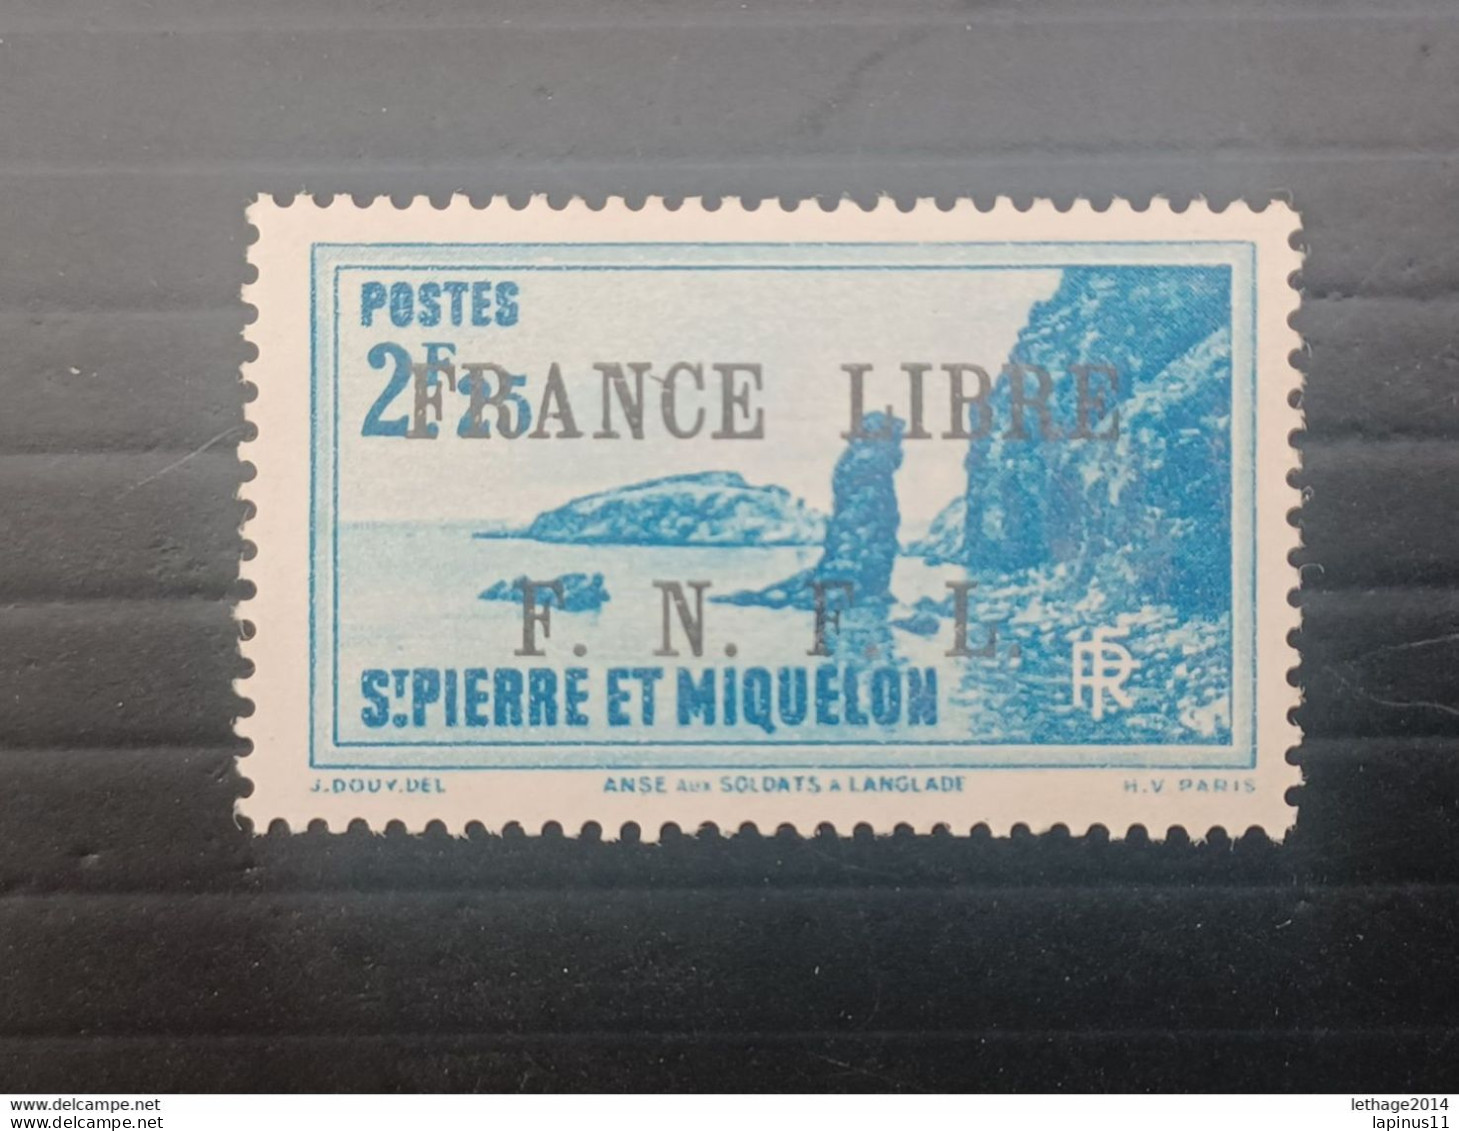 ST PIERRE ET MIQUELLON 1941 STAMPS OF 1922 OVERPRINT FRANCE LIBRE F N F L CAT. YVERT N. 269 MNG - Unused Stamps